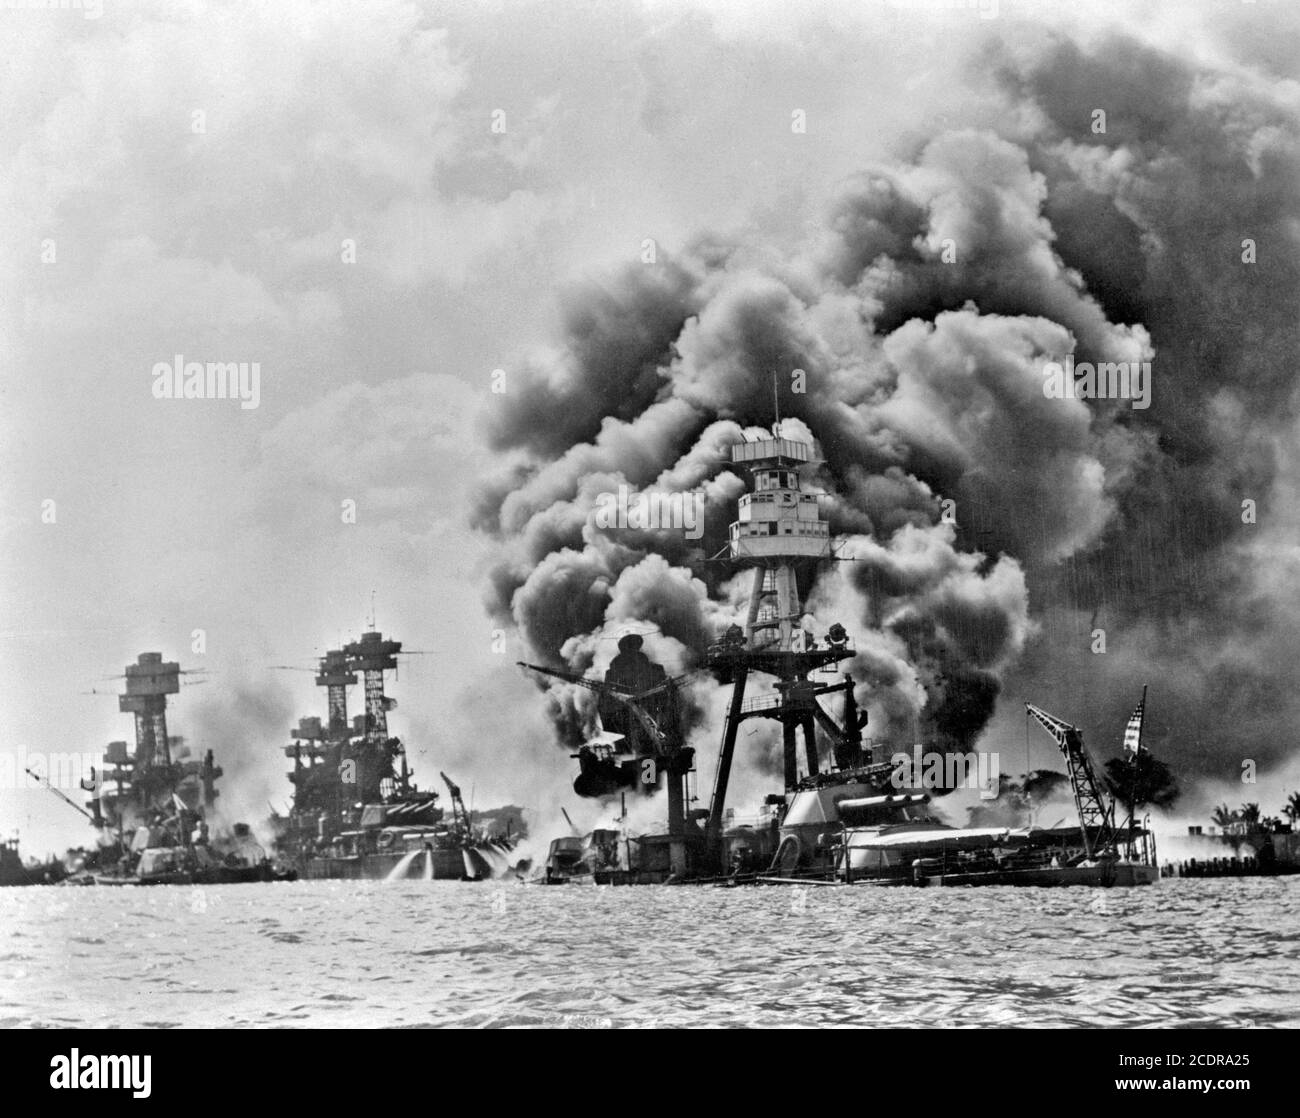 Pearl Harbor 1941. Foto der U.S.S. West Virginia (schwer beschädigt), U.S.S. Tennessee (beschädigt) und U.S.S. Arizona (versenkt), nach dem japanischen Angriff auf Pearl Harbor, 7. Dezember 1941. Stockfoto